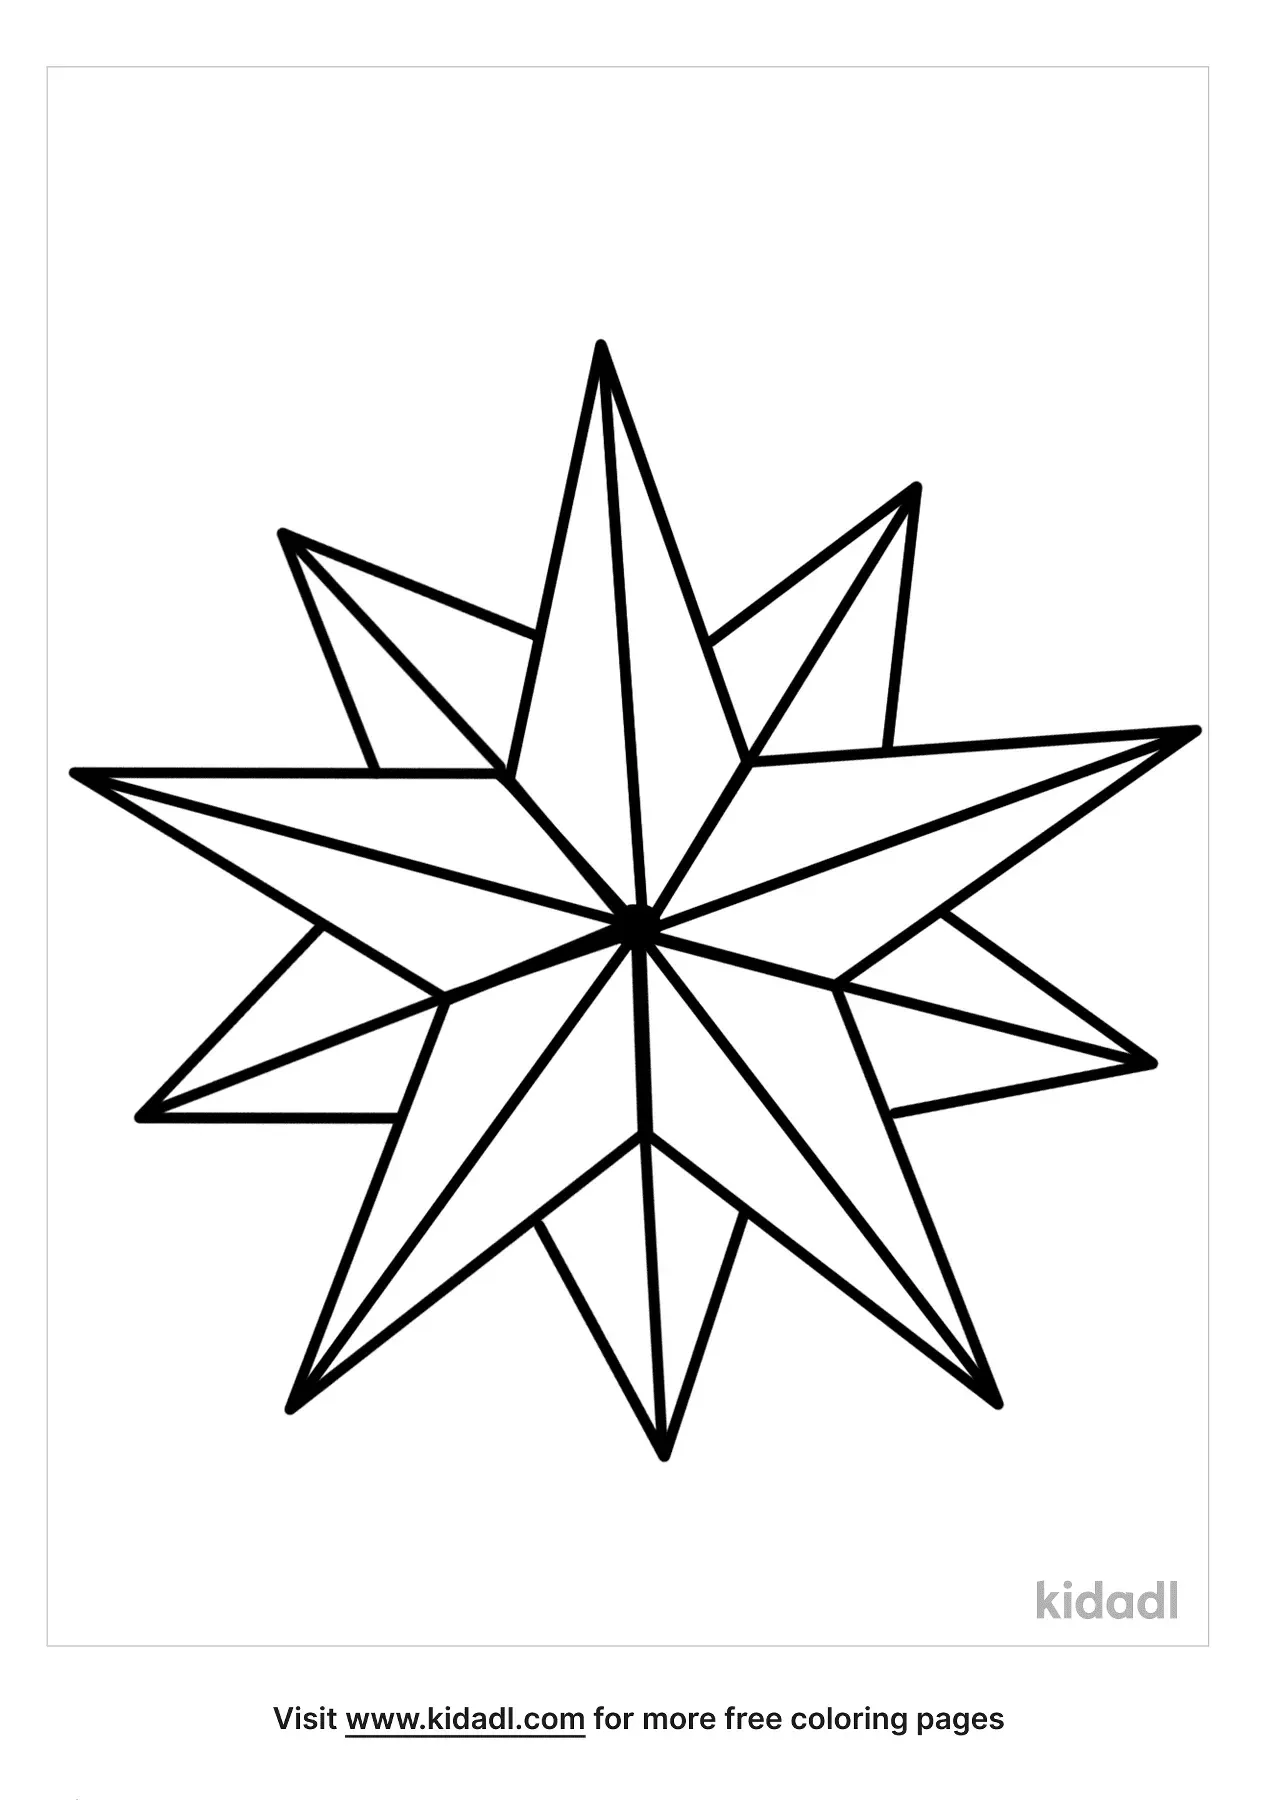 Free Christmas Star Coloring Page | Coloring Page Printables | Kidadl